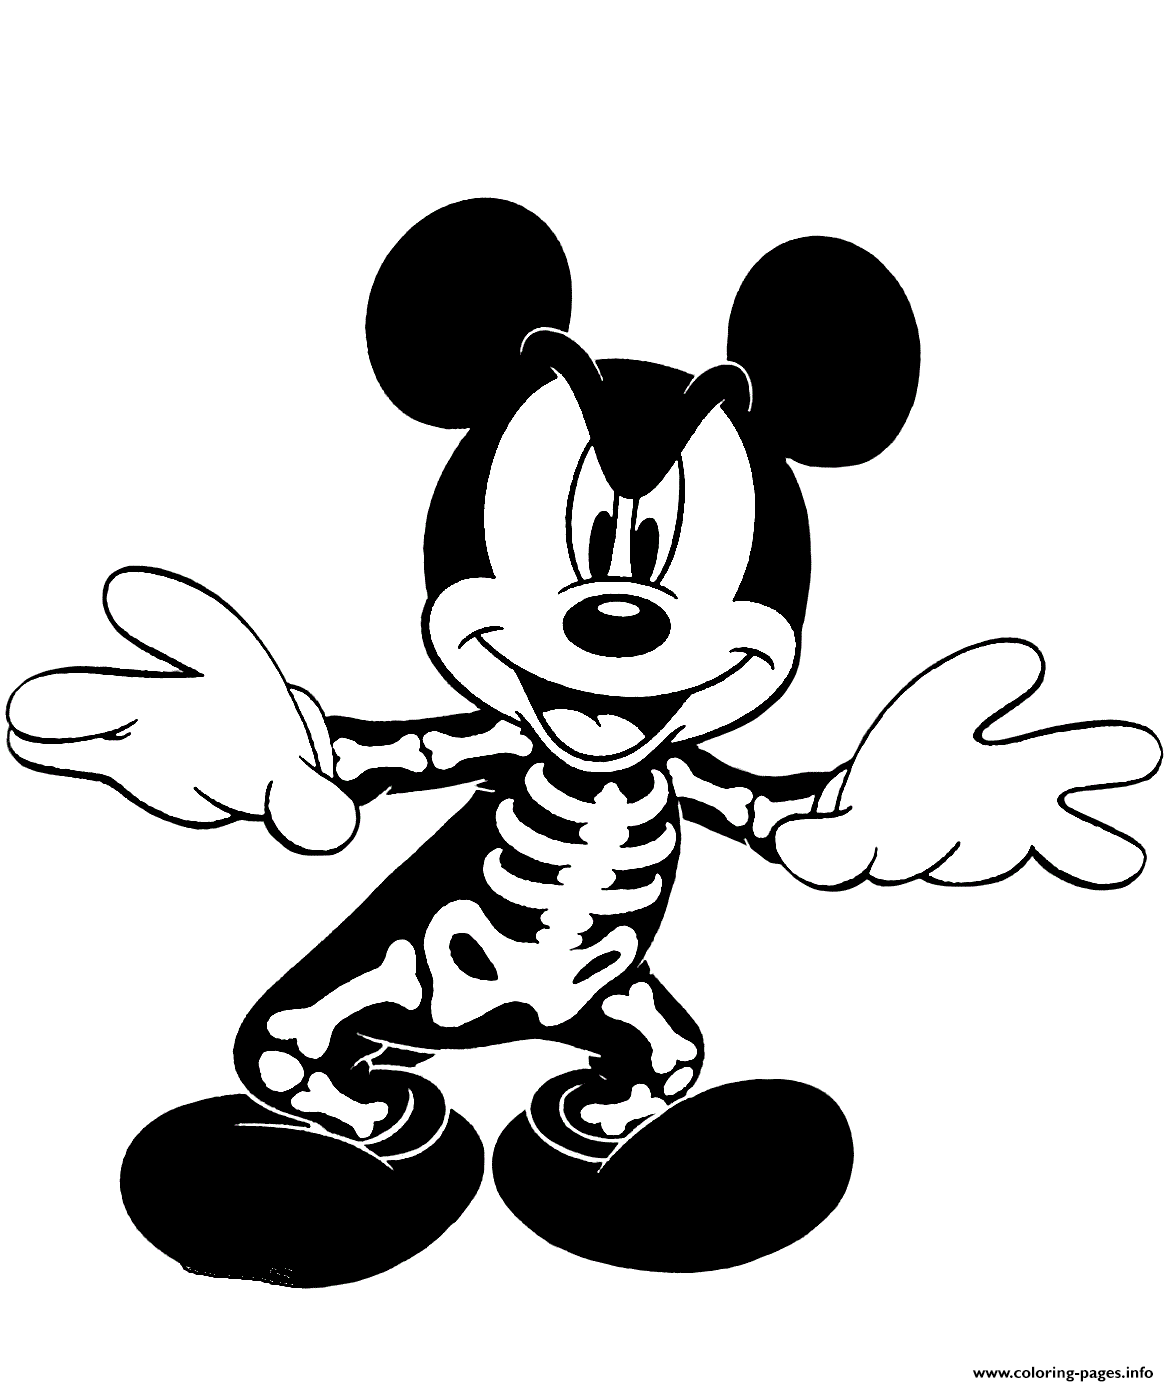 Mickey Mouse As A Skeleton Disney Halloween coloring